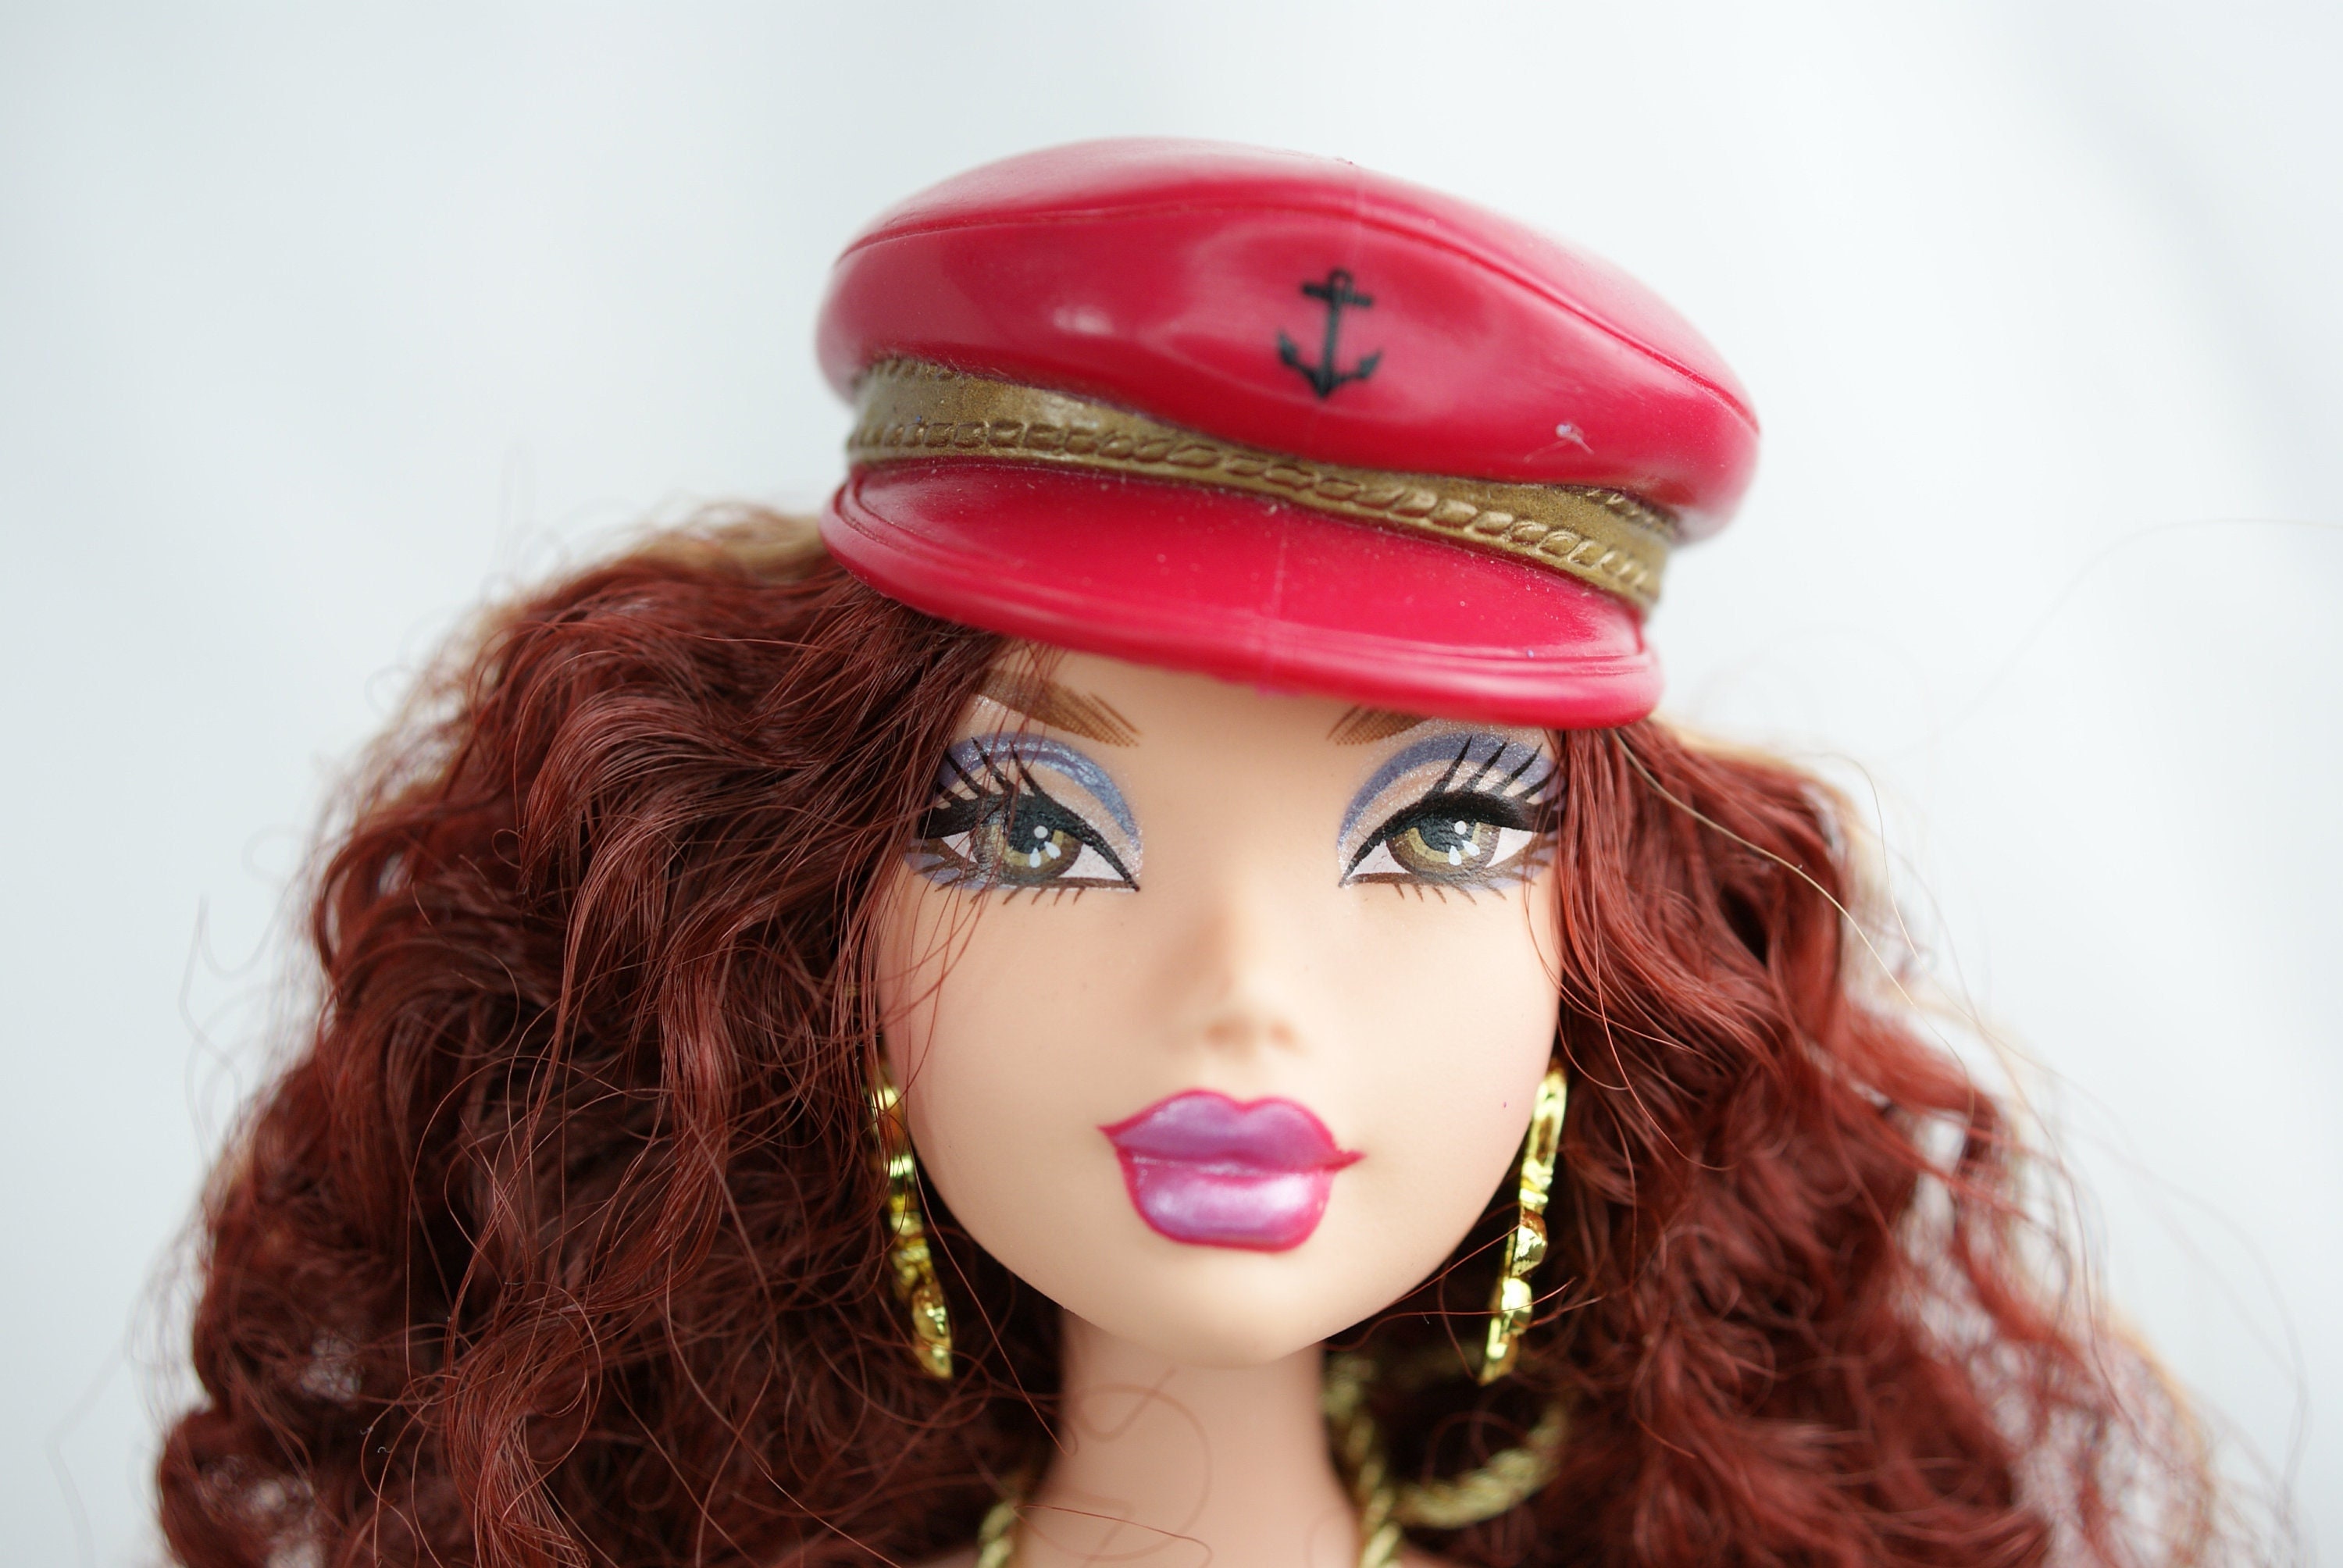 Barbie My Scene Chelsea Doll shopping Spree With Barbie -  Canada